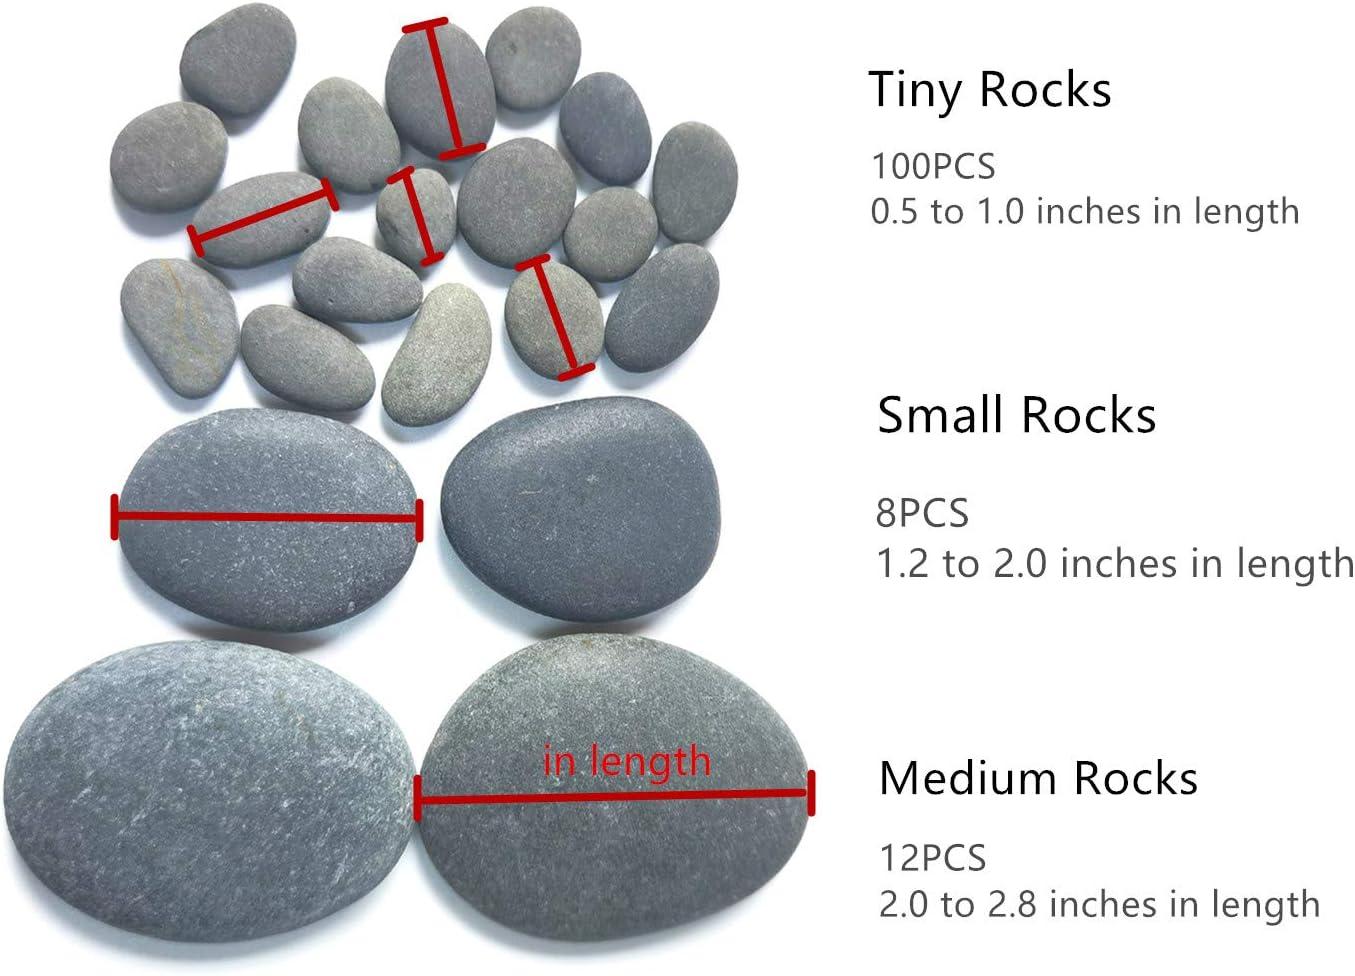 Lifetop 100 PCS Painting Rocks Bulk, Natural River DIY Rocks Flat & Smooth  Kindness Rocks for Arts, Crafts, Decoration, Small Rocks for